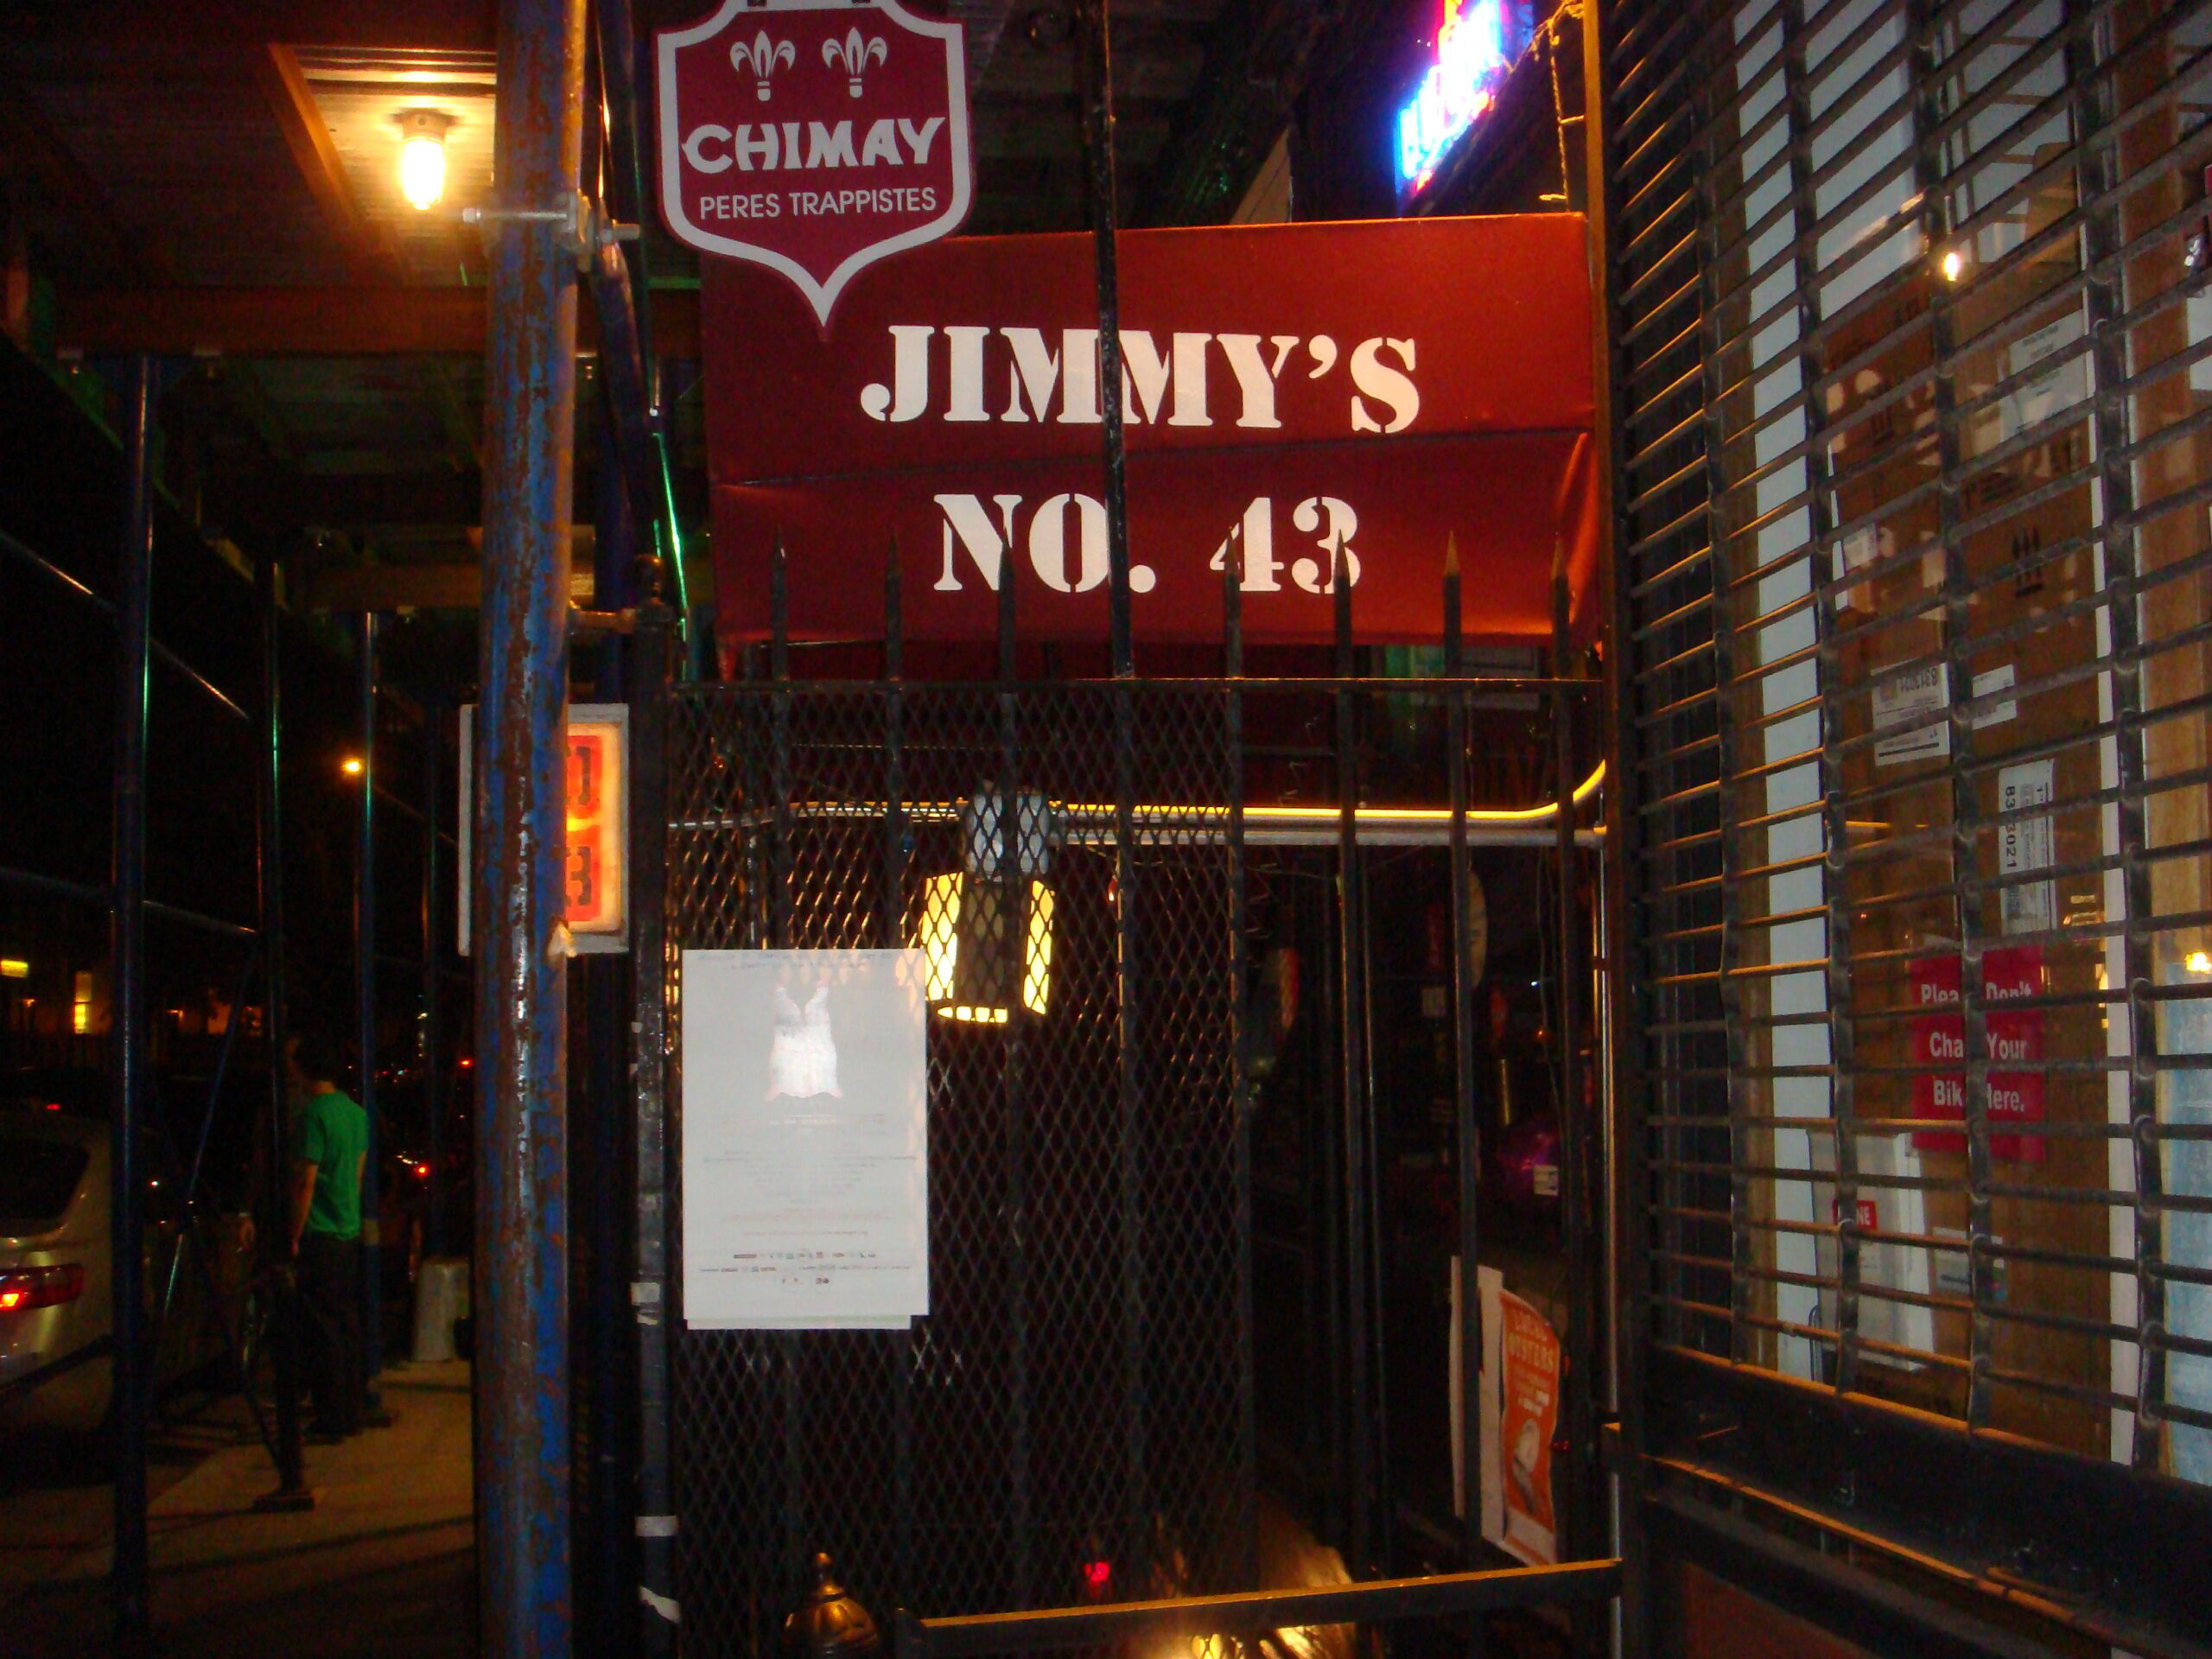 Jimmy's No. 43